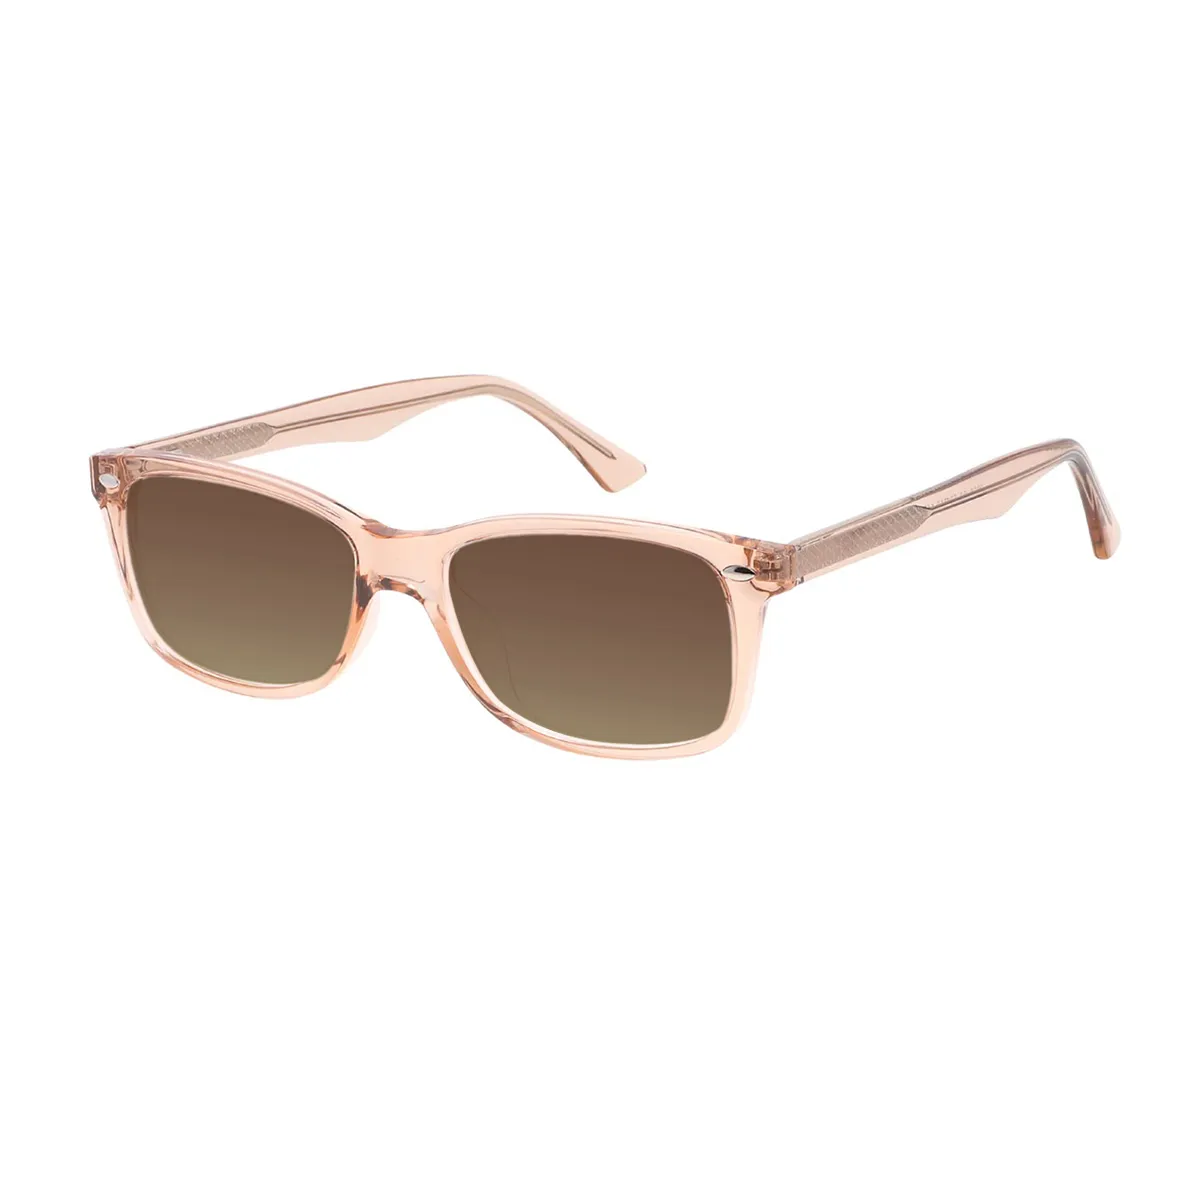 Leonora - Rectangle Brown Sunglasses for Women